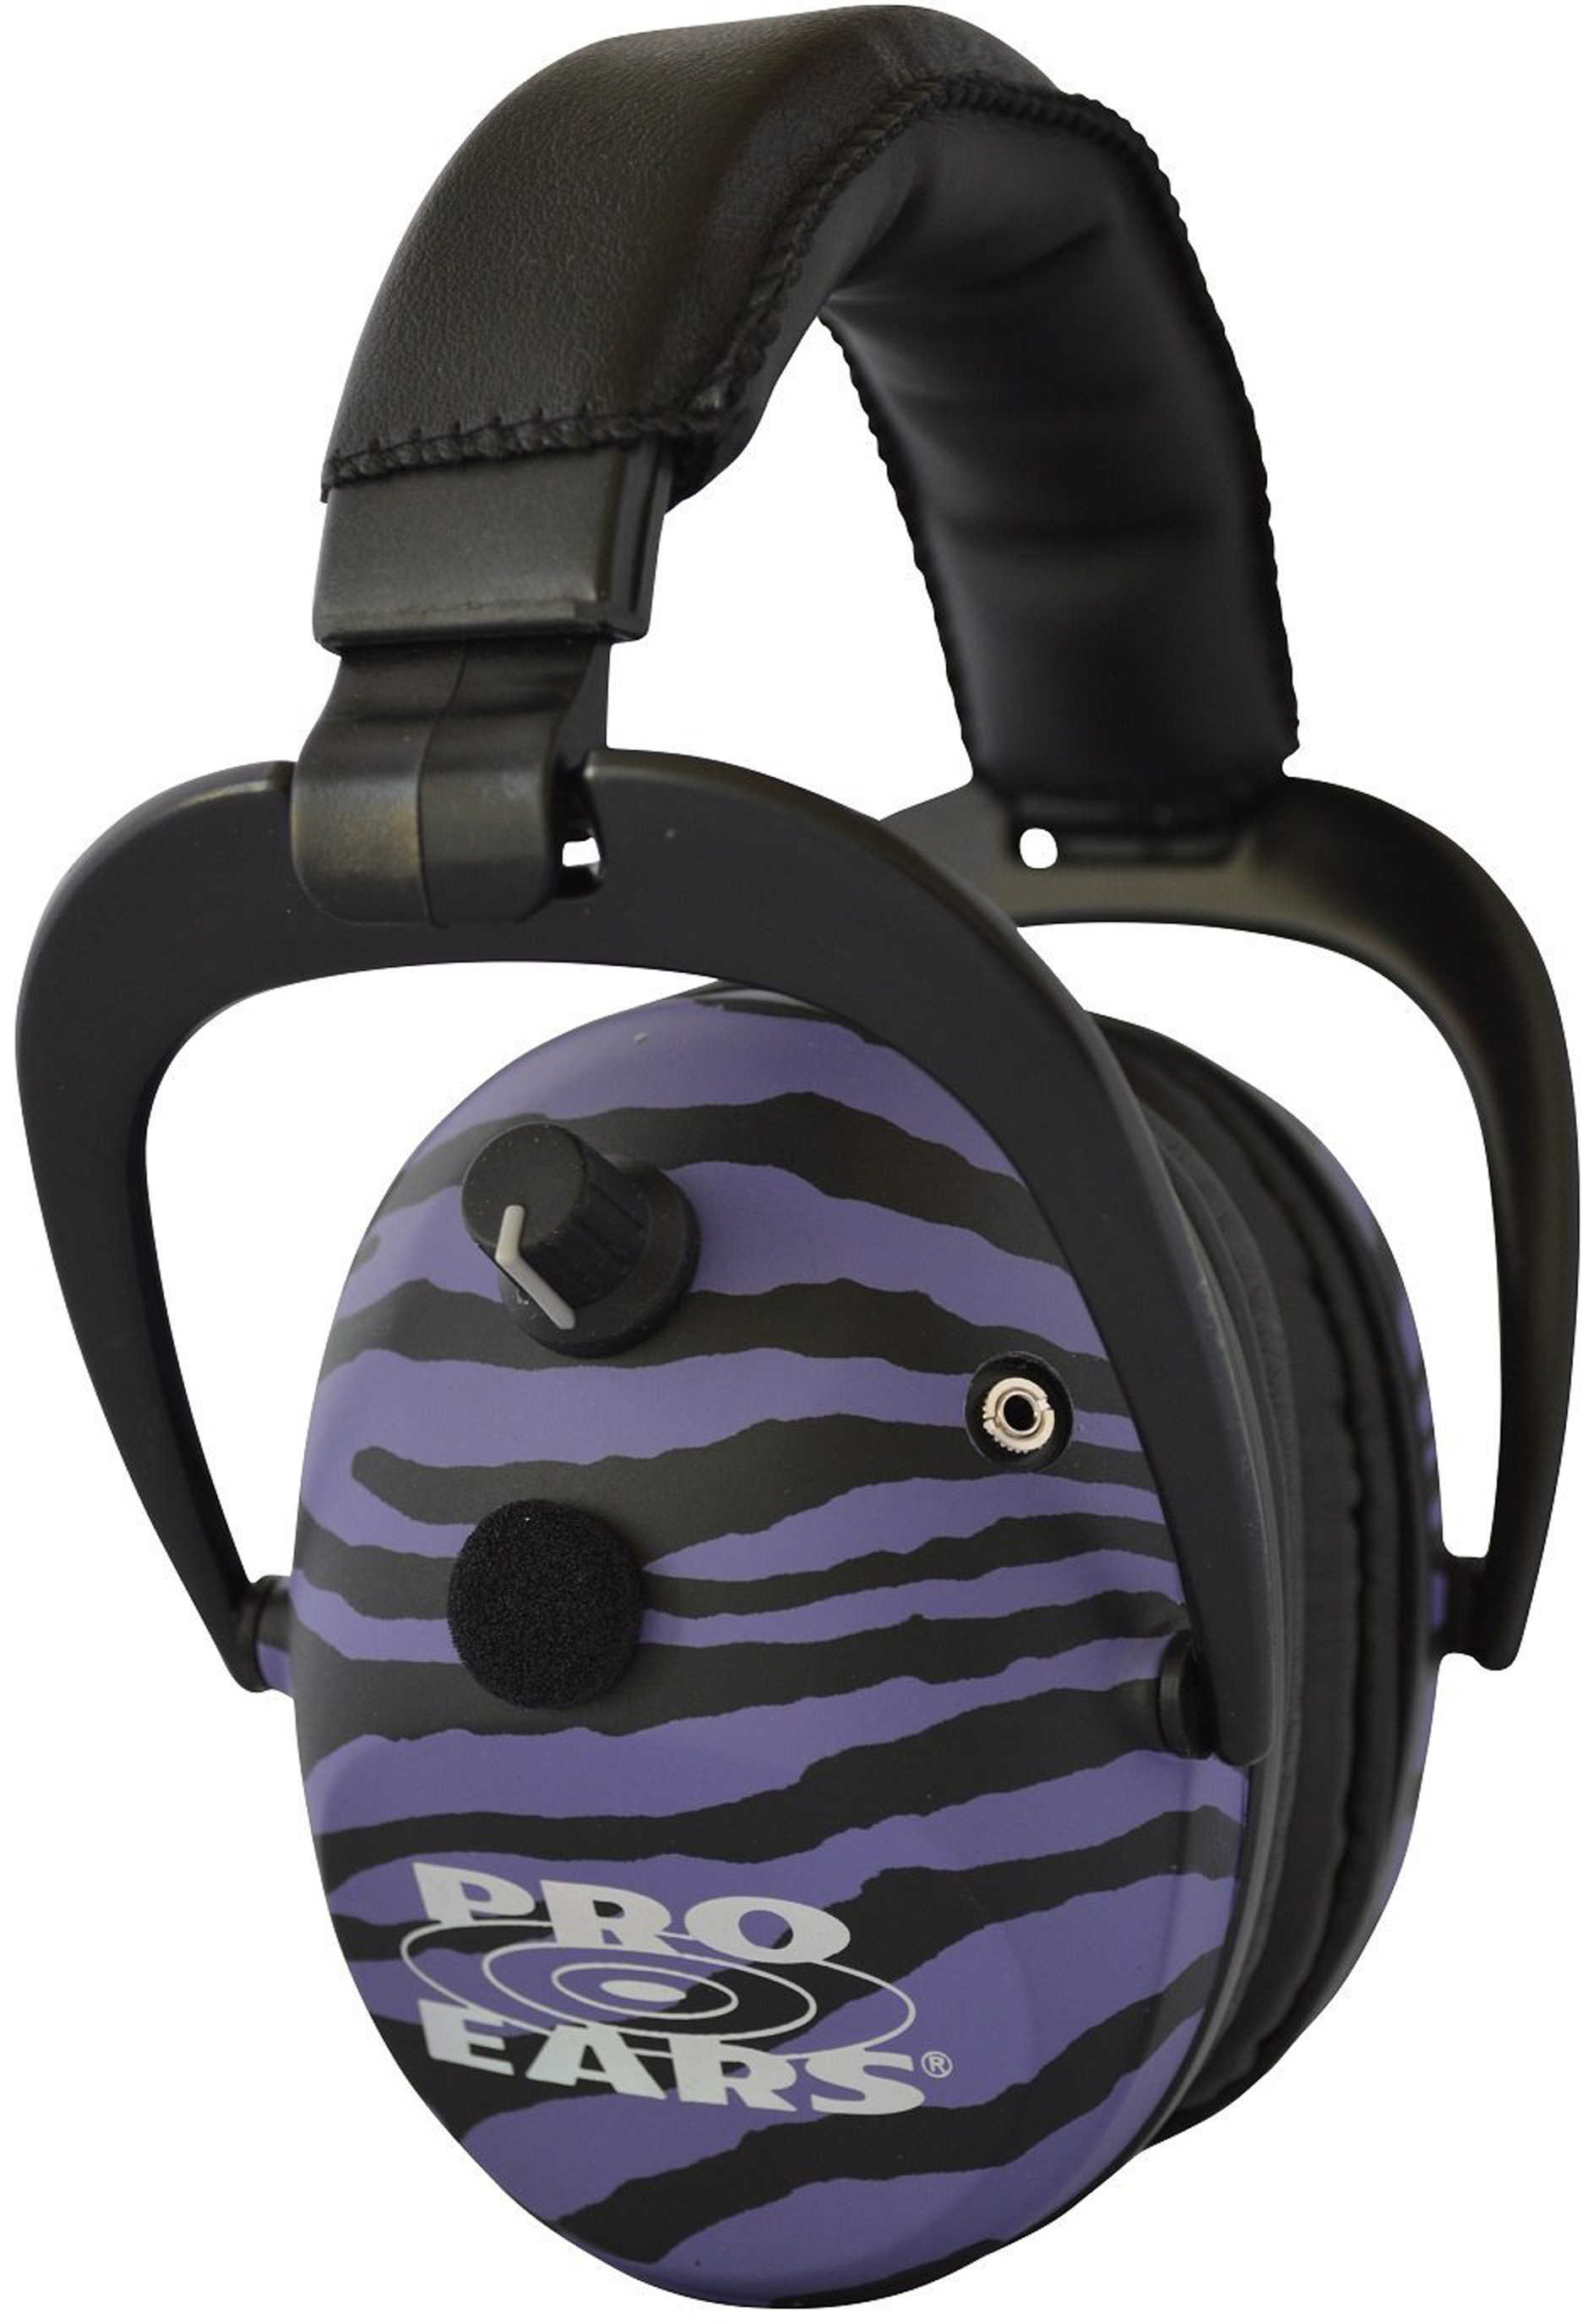 Pro Ears Predator Gold Noise Reduction Rating 26dB, Purple Zebra Md: GSP300PUZ